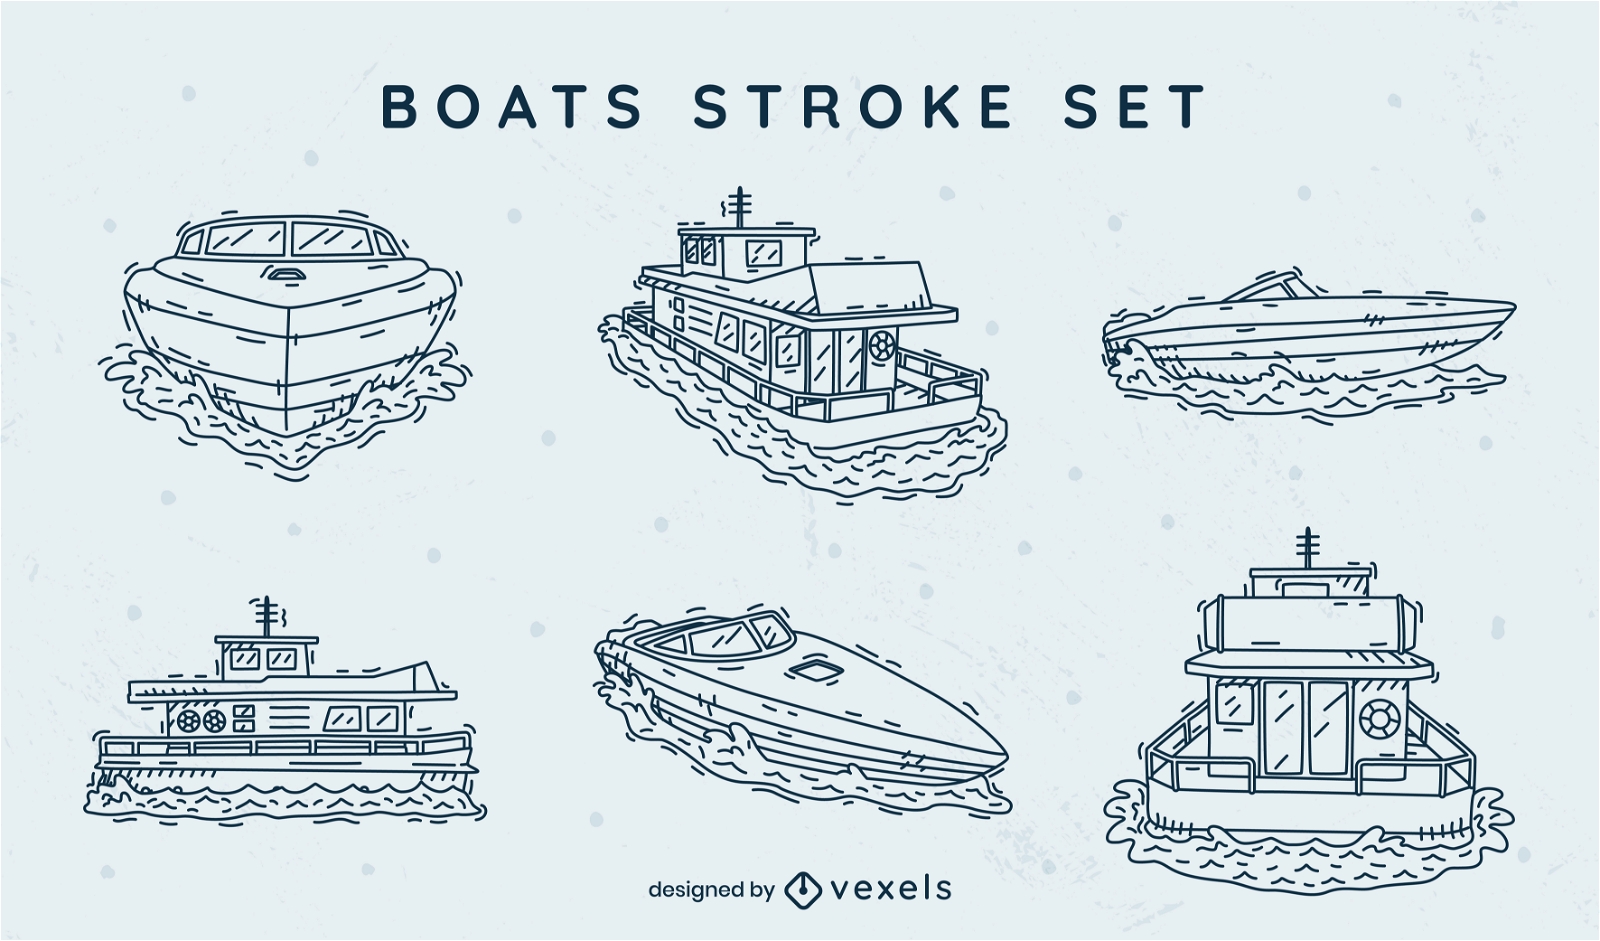 Boats stroke set